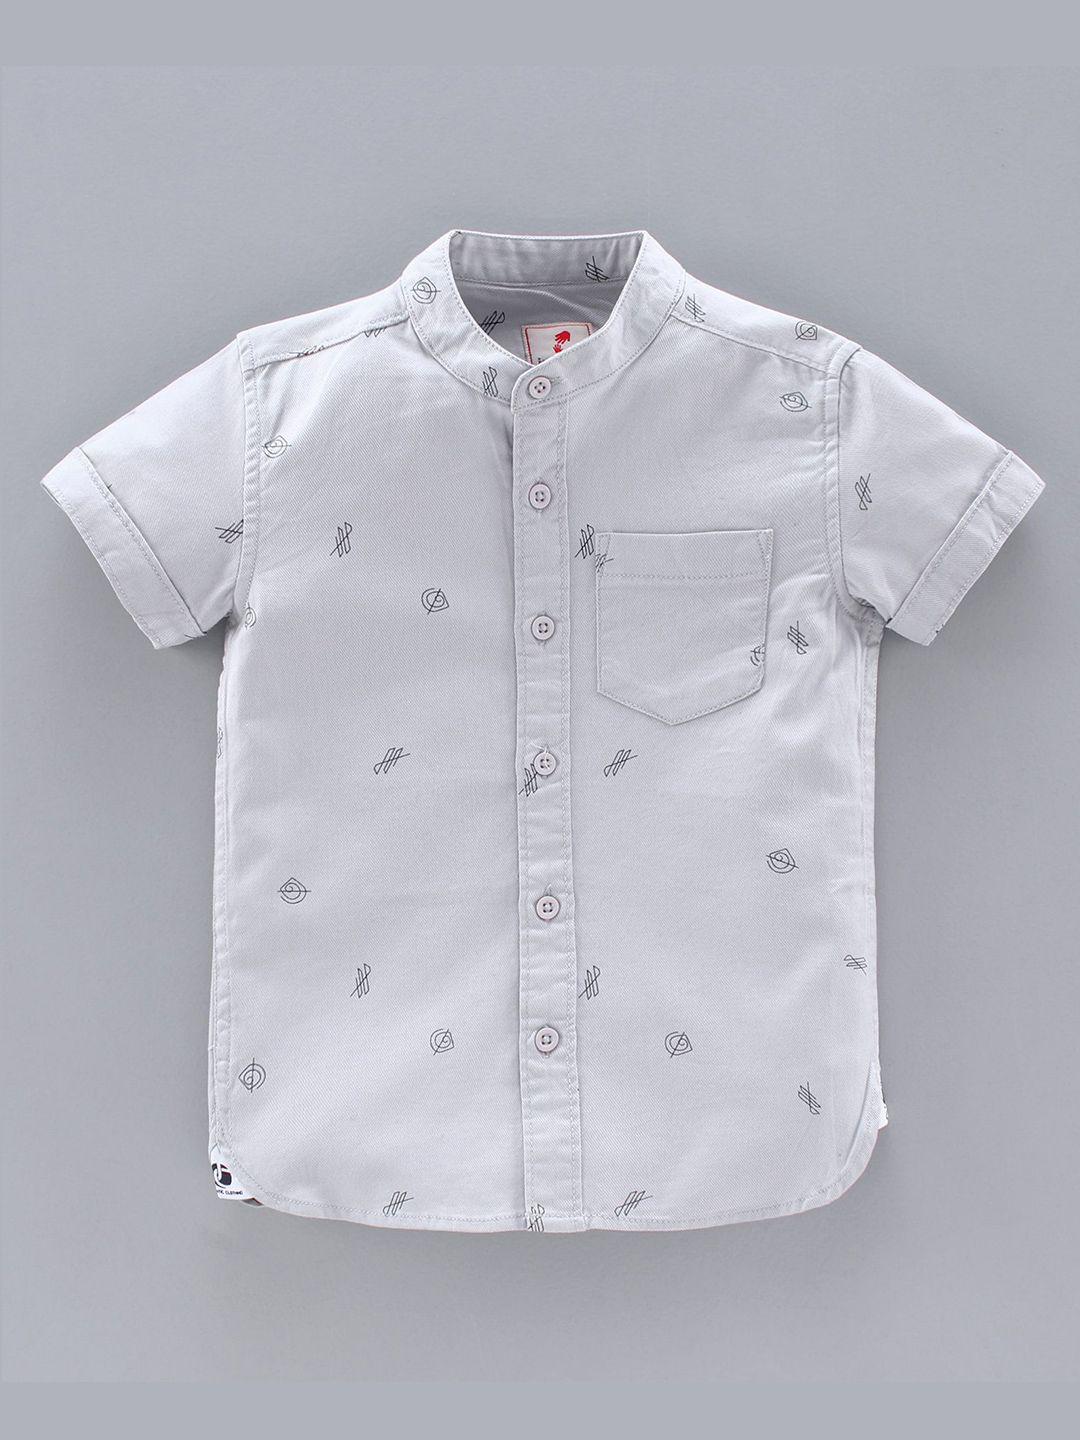 juscubs boys premium conversational printed pure cotton casual shirt